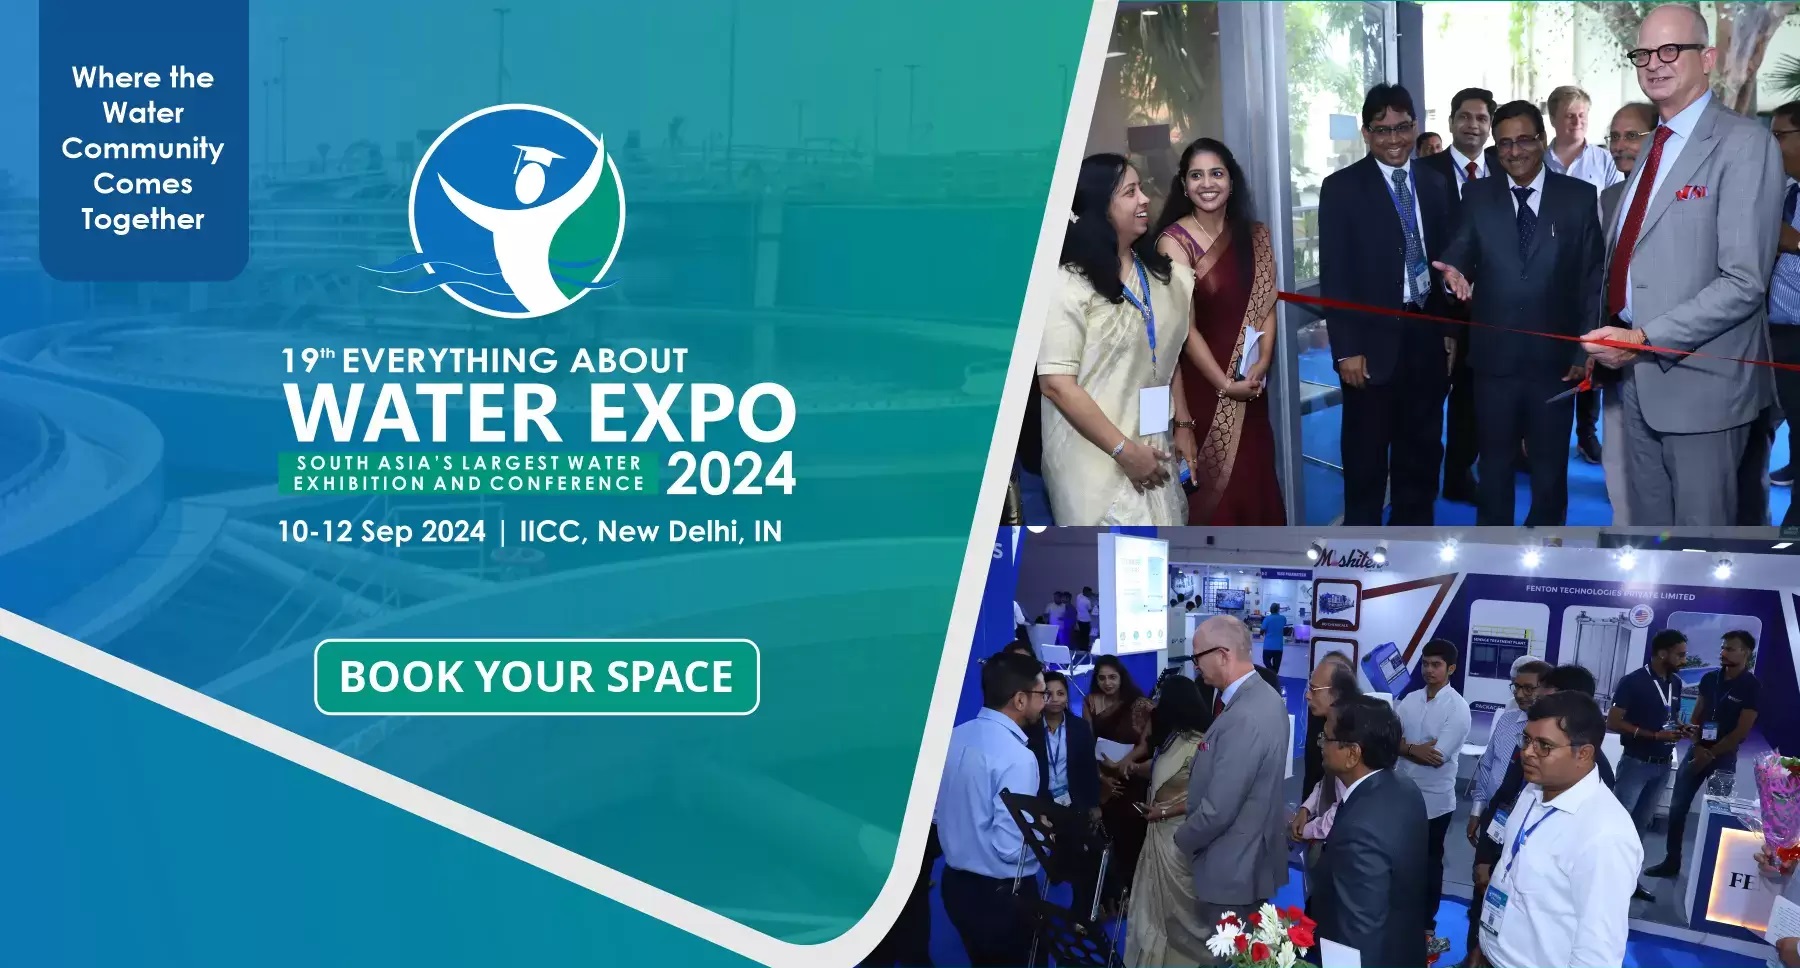 19th EverythingAboutWater Expo 2024, West Delhi, Delhi, India